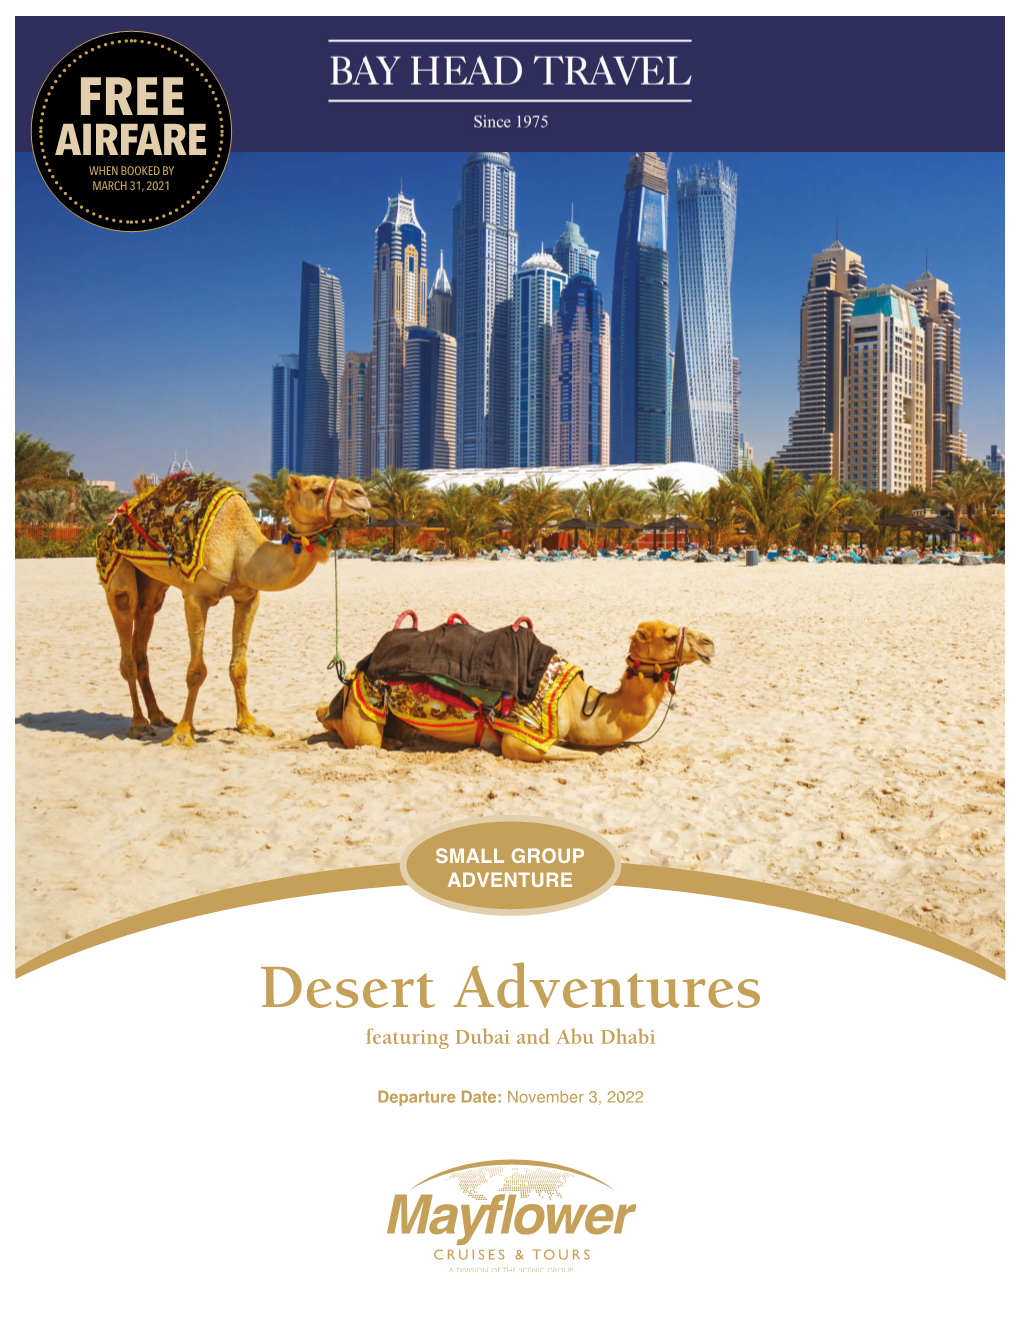 Desert Adventures Featuring Dubai and Abu Dhabi